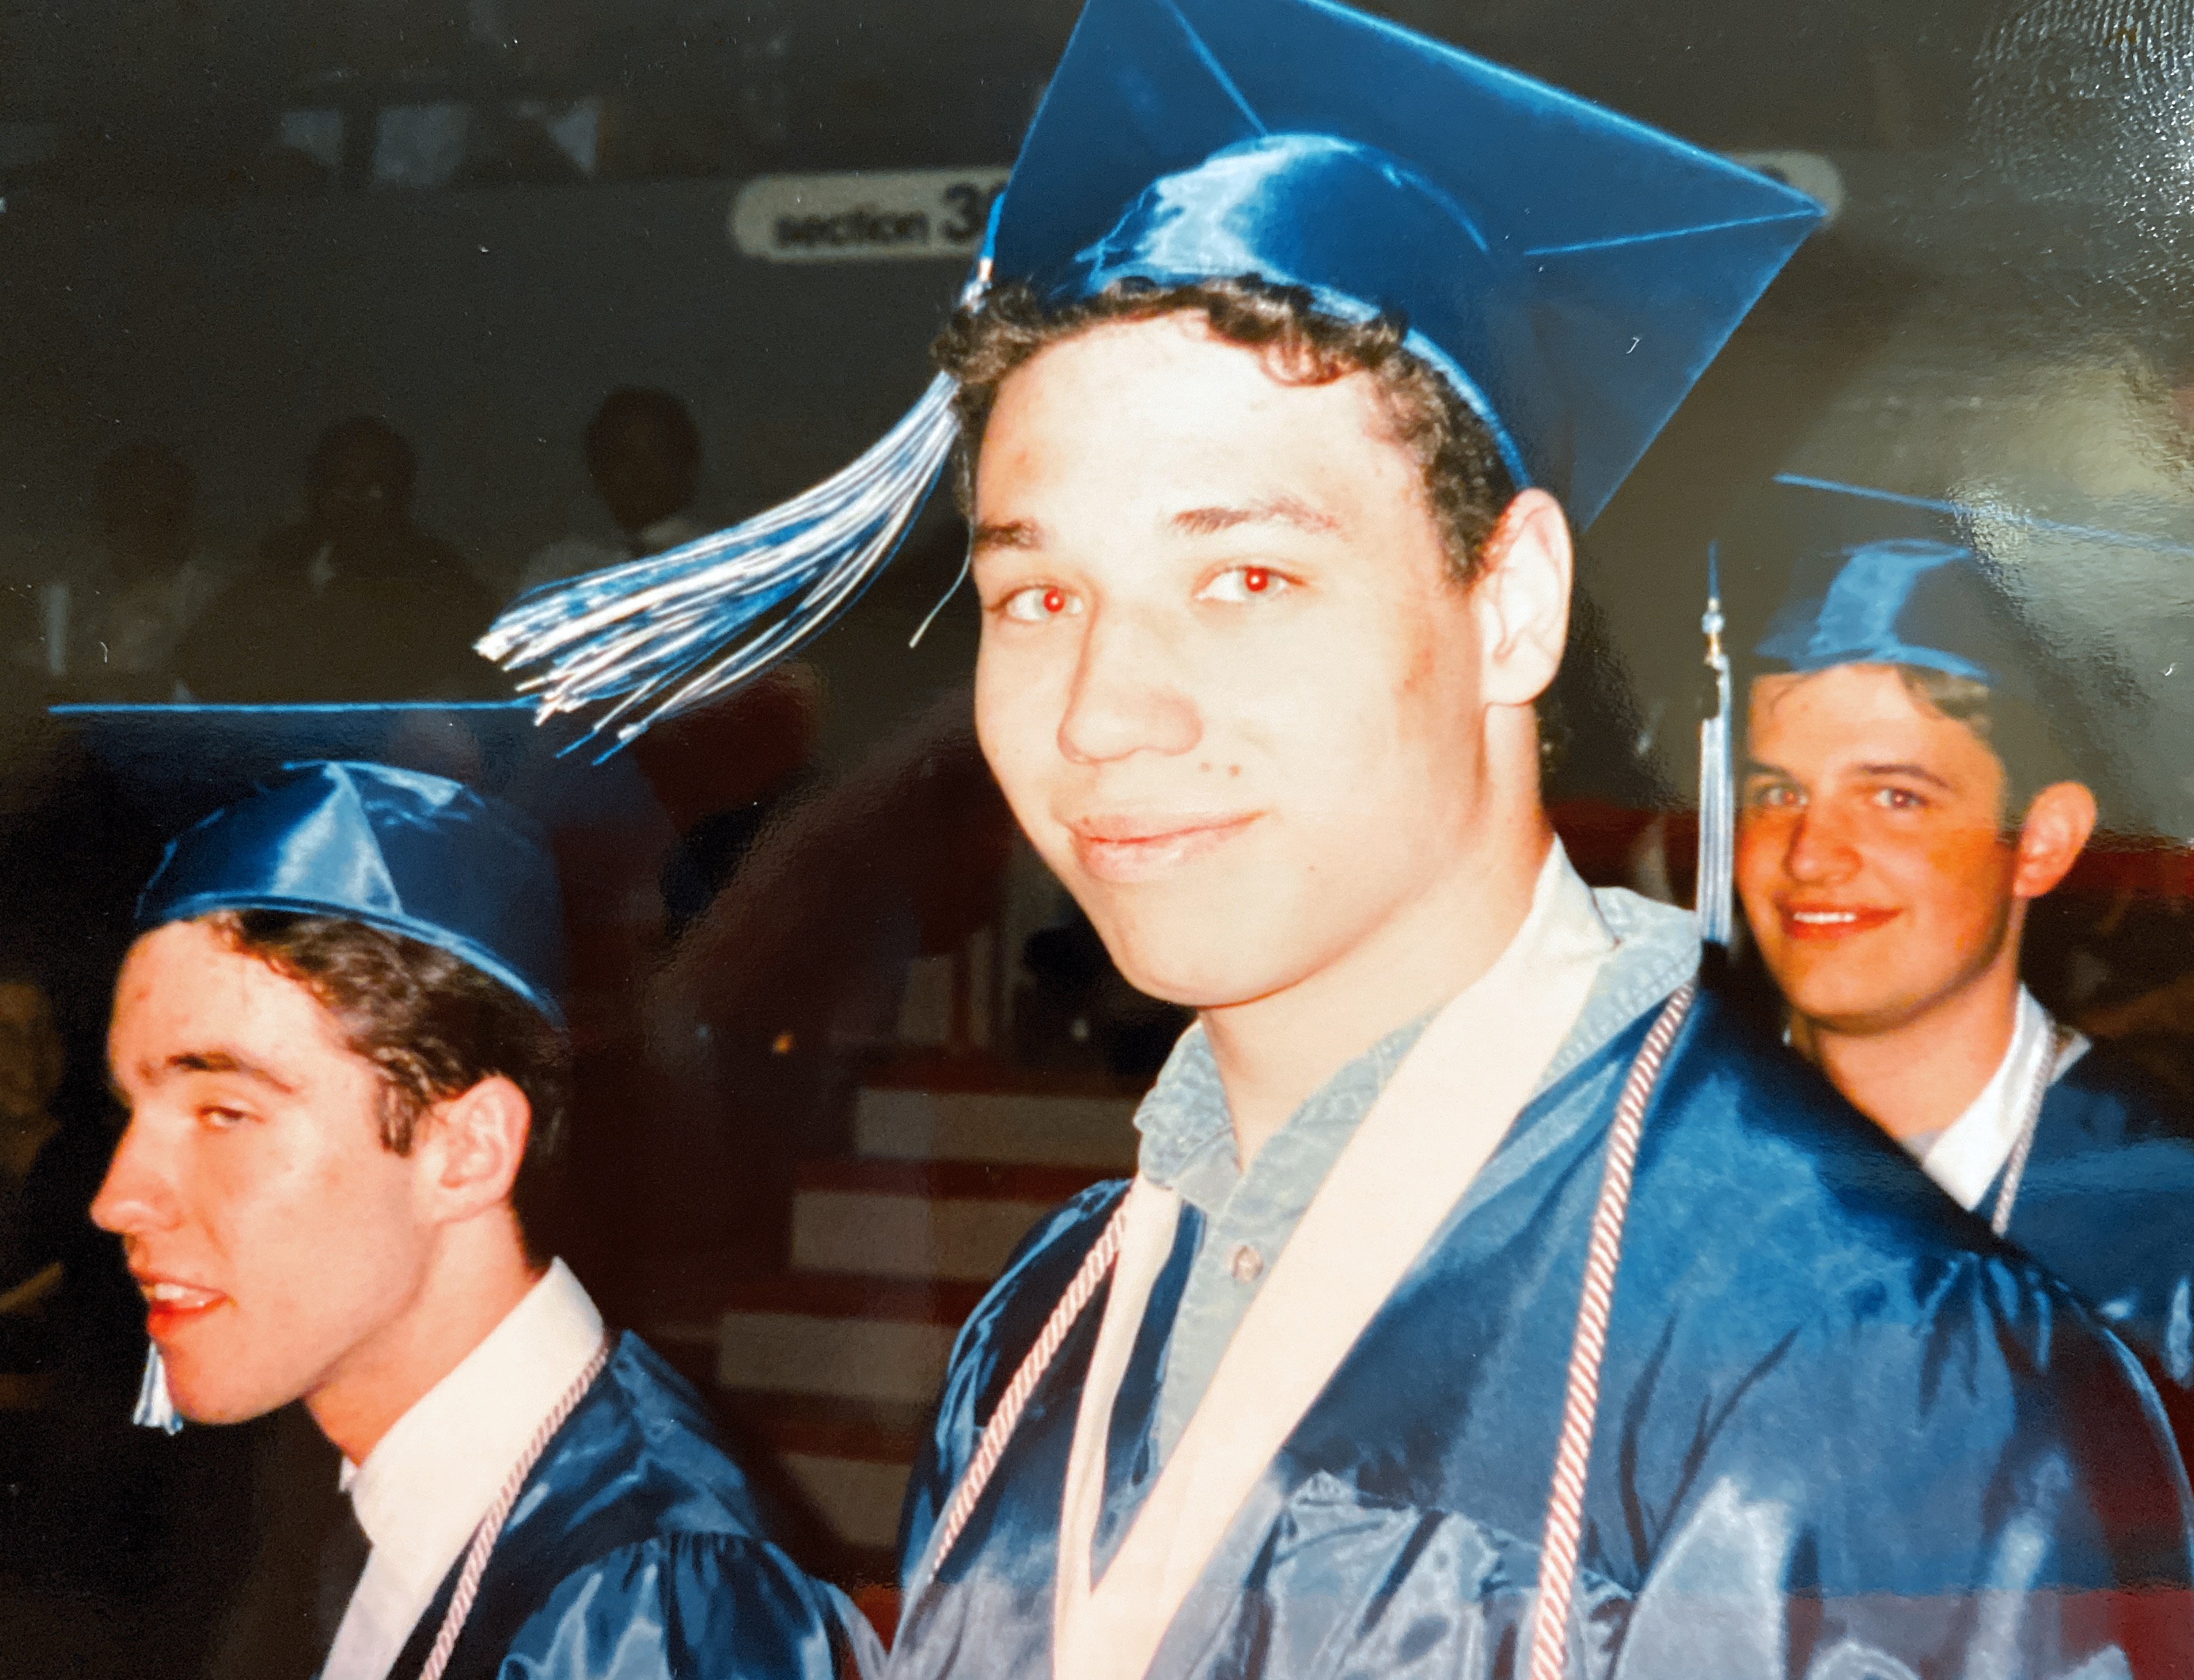 Michael graduation 1997